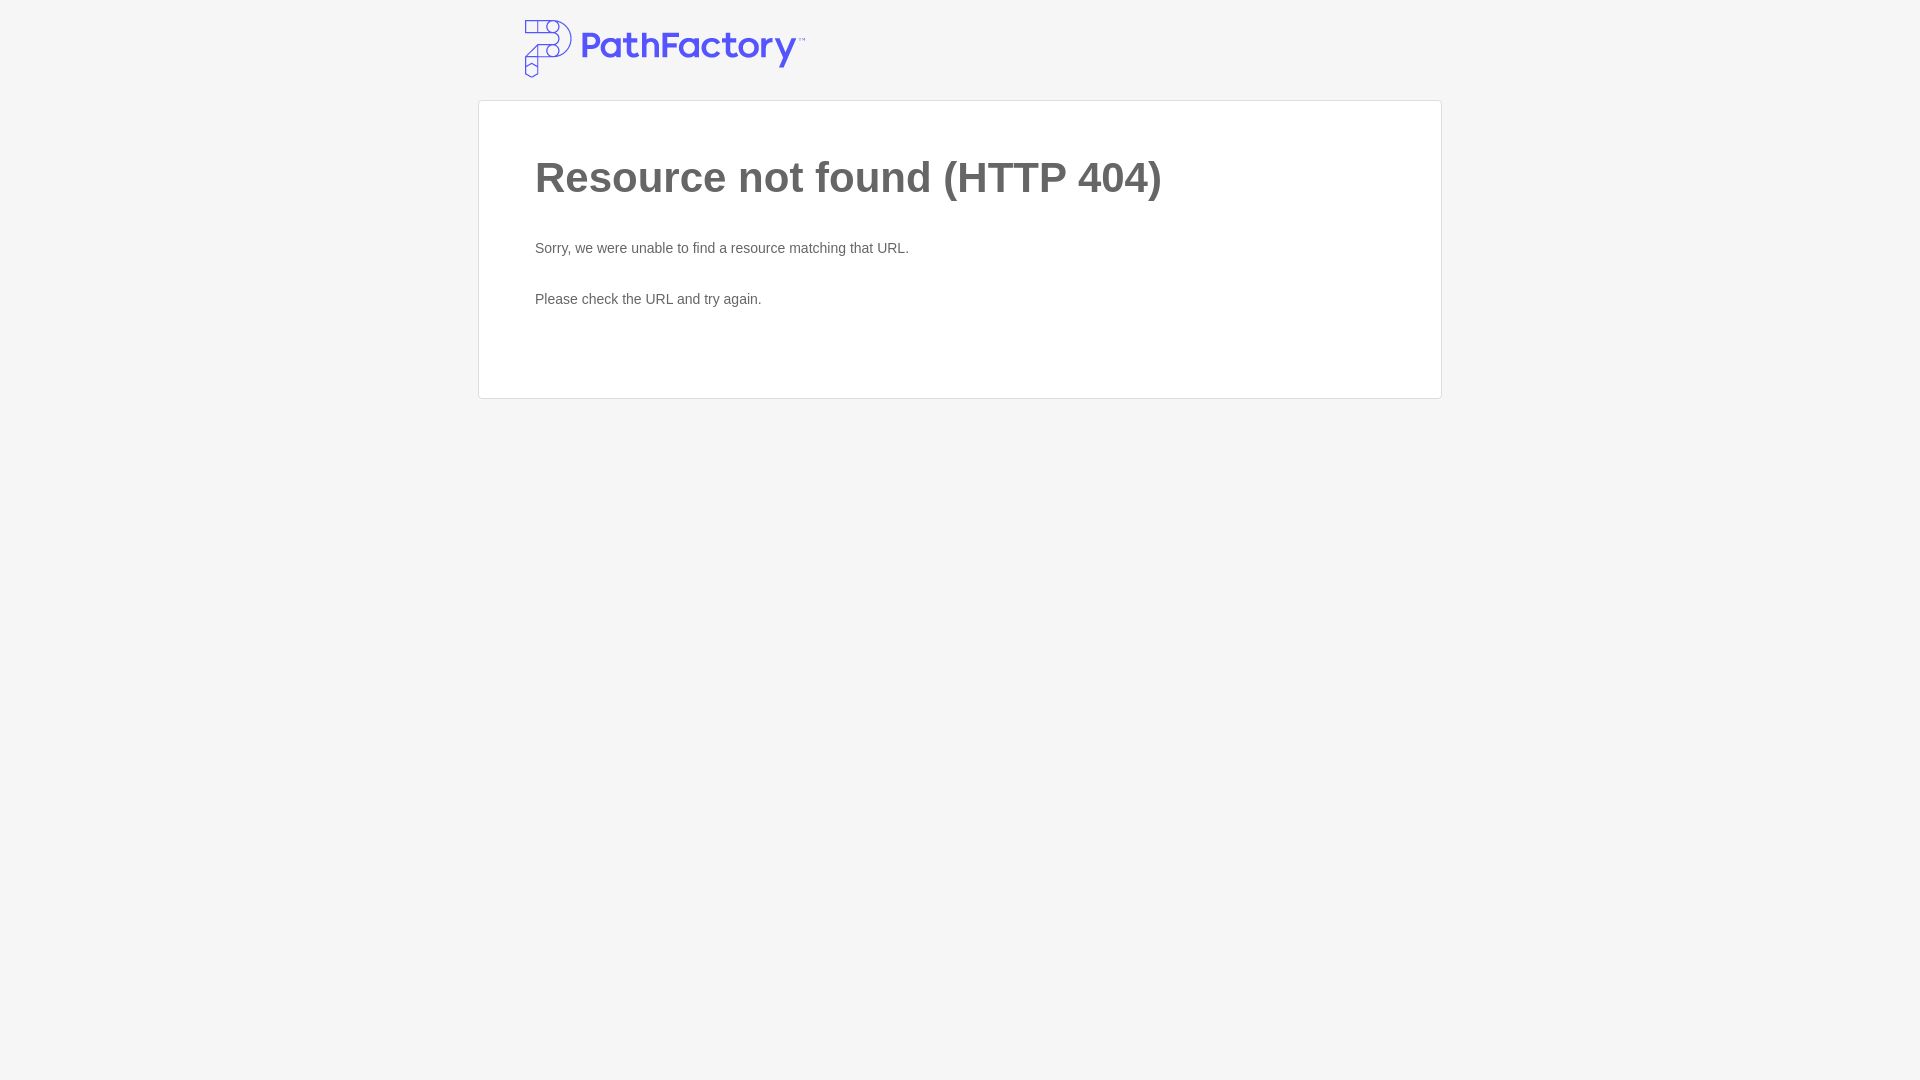 Website status voipa078.pathfactory.com is   ONLINE